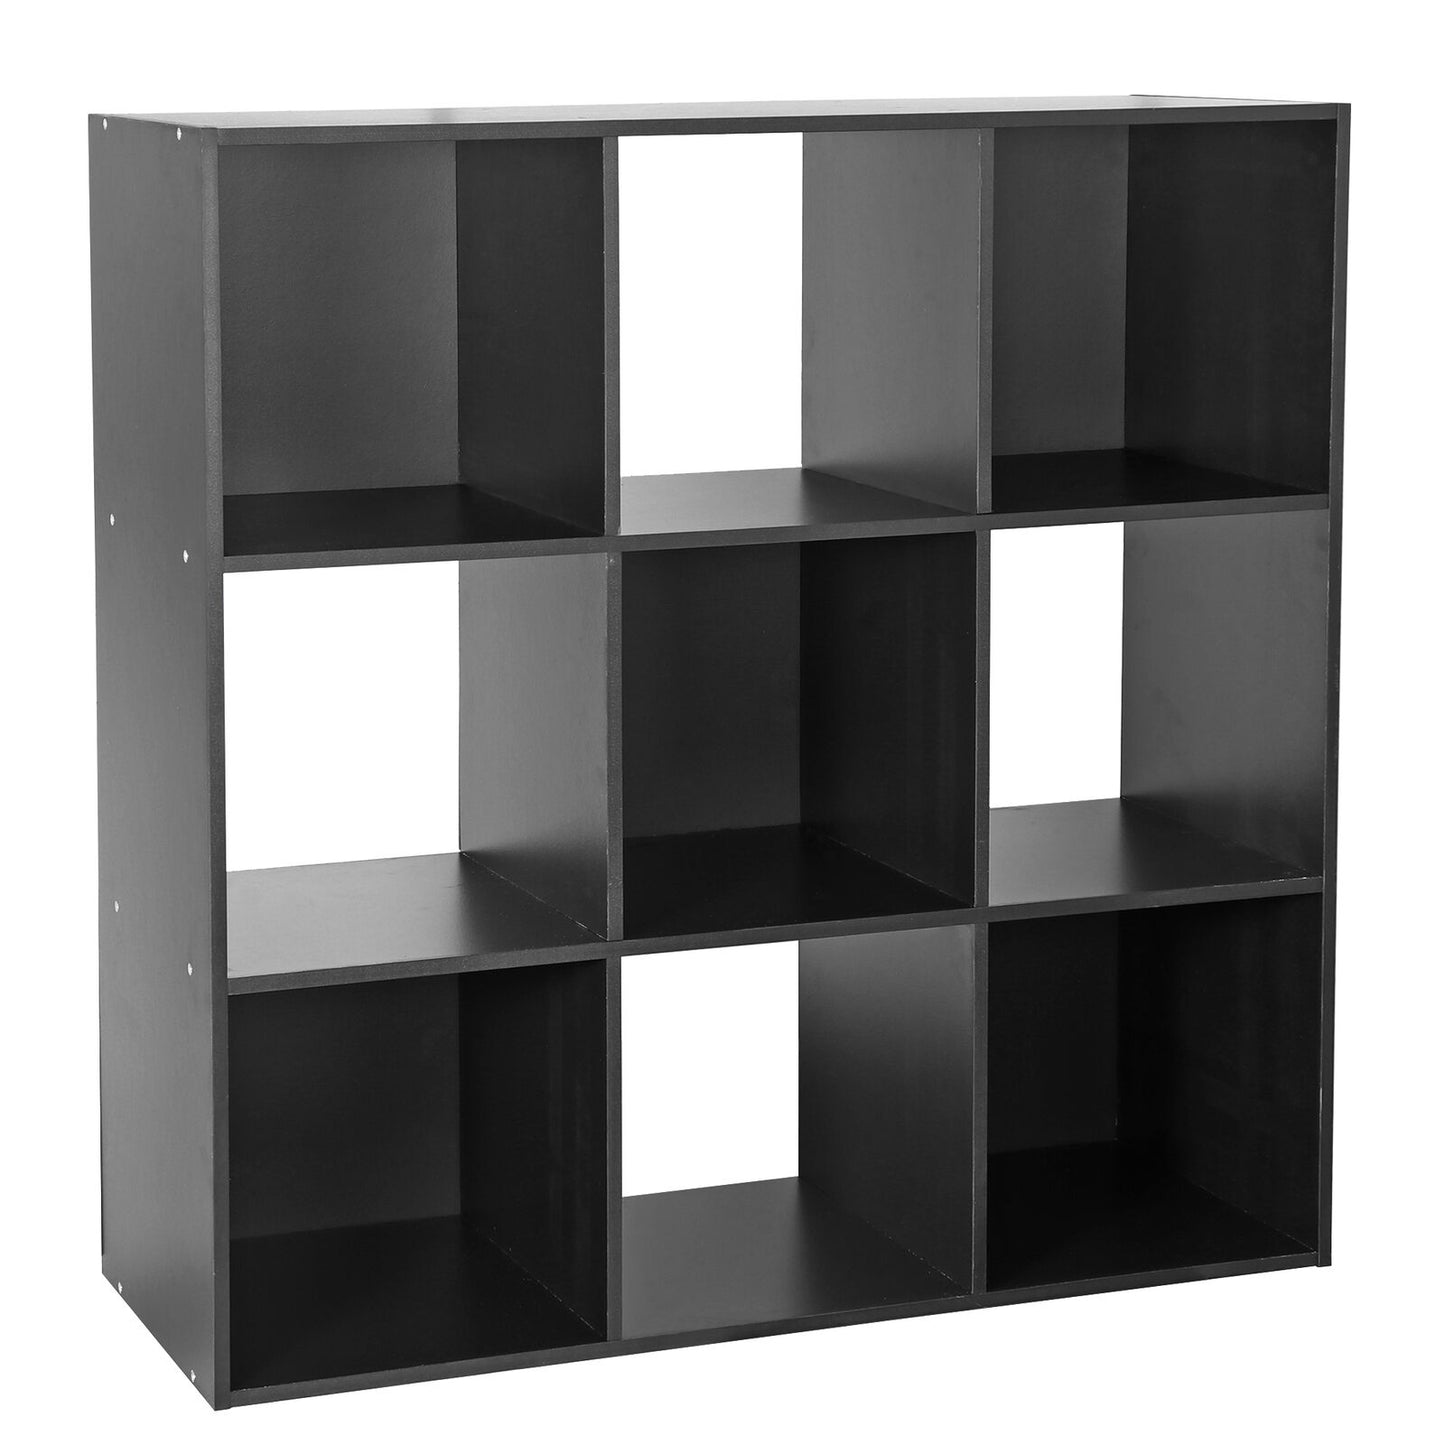 9-Cube Black Closet Organizer Storage Shelves Save Space Study Bookshelves